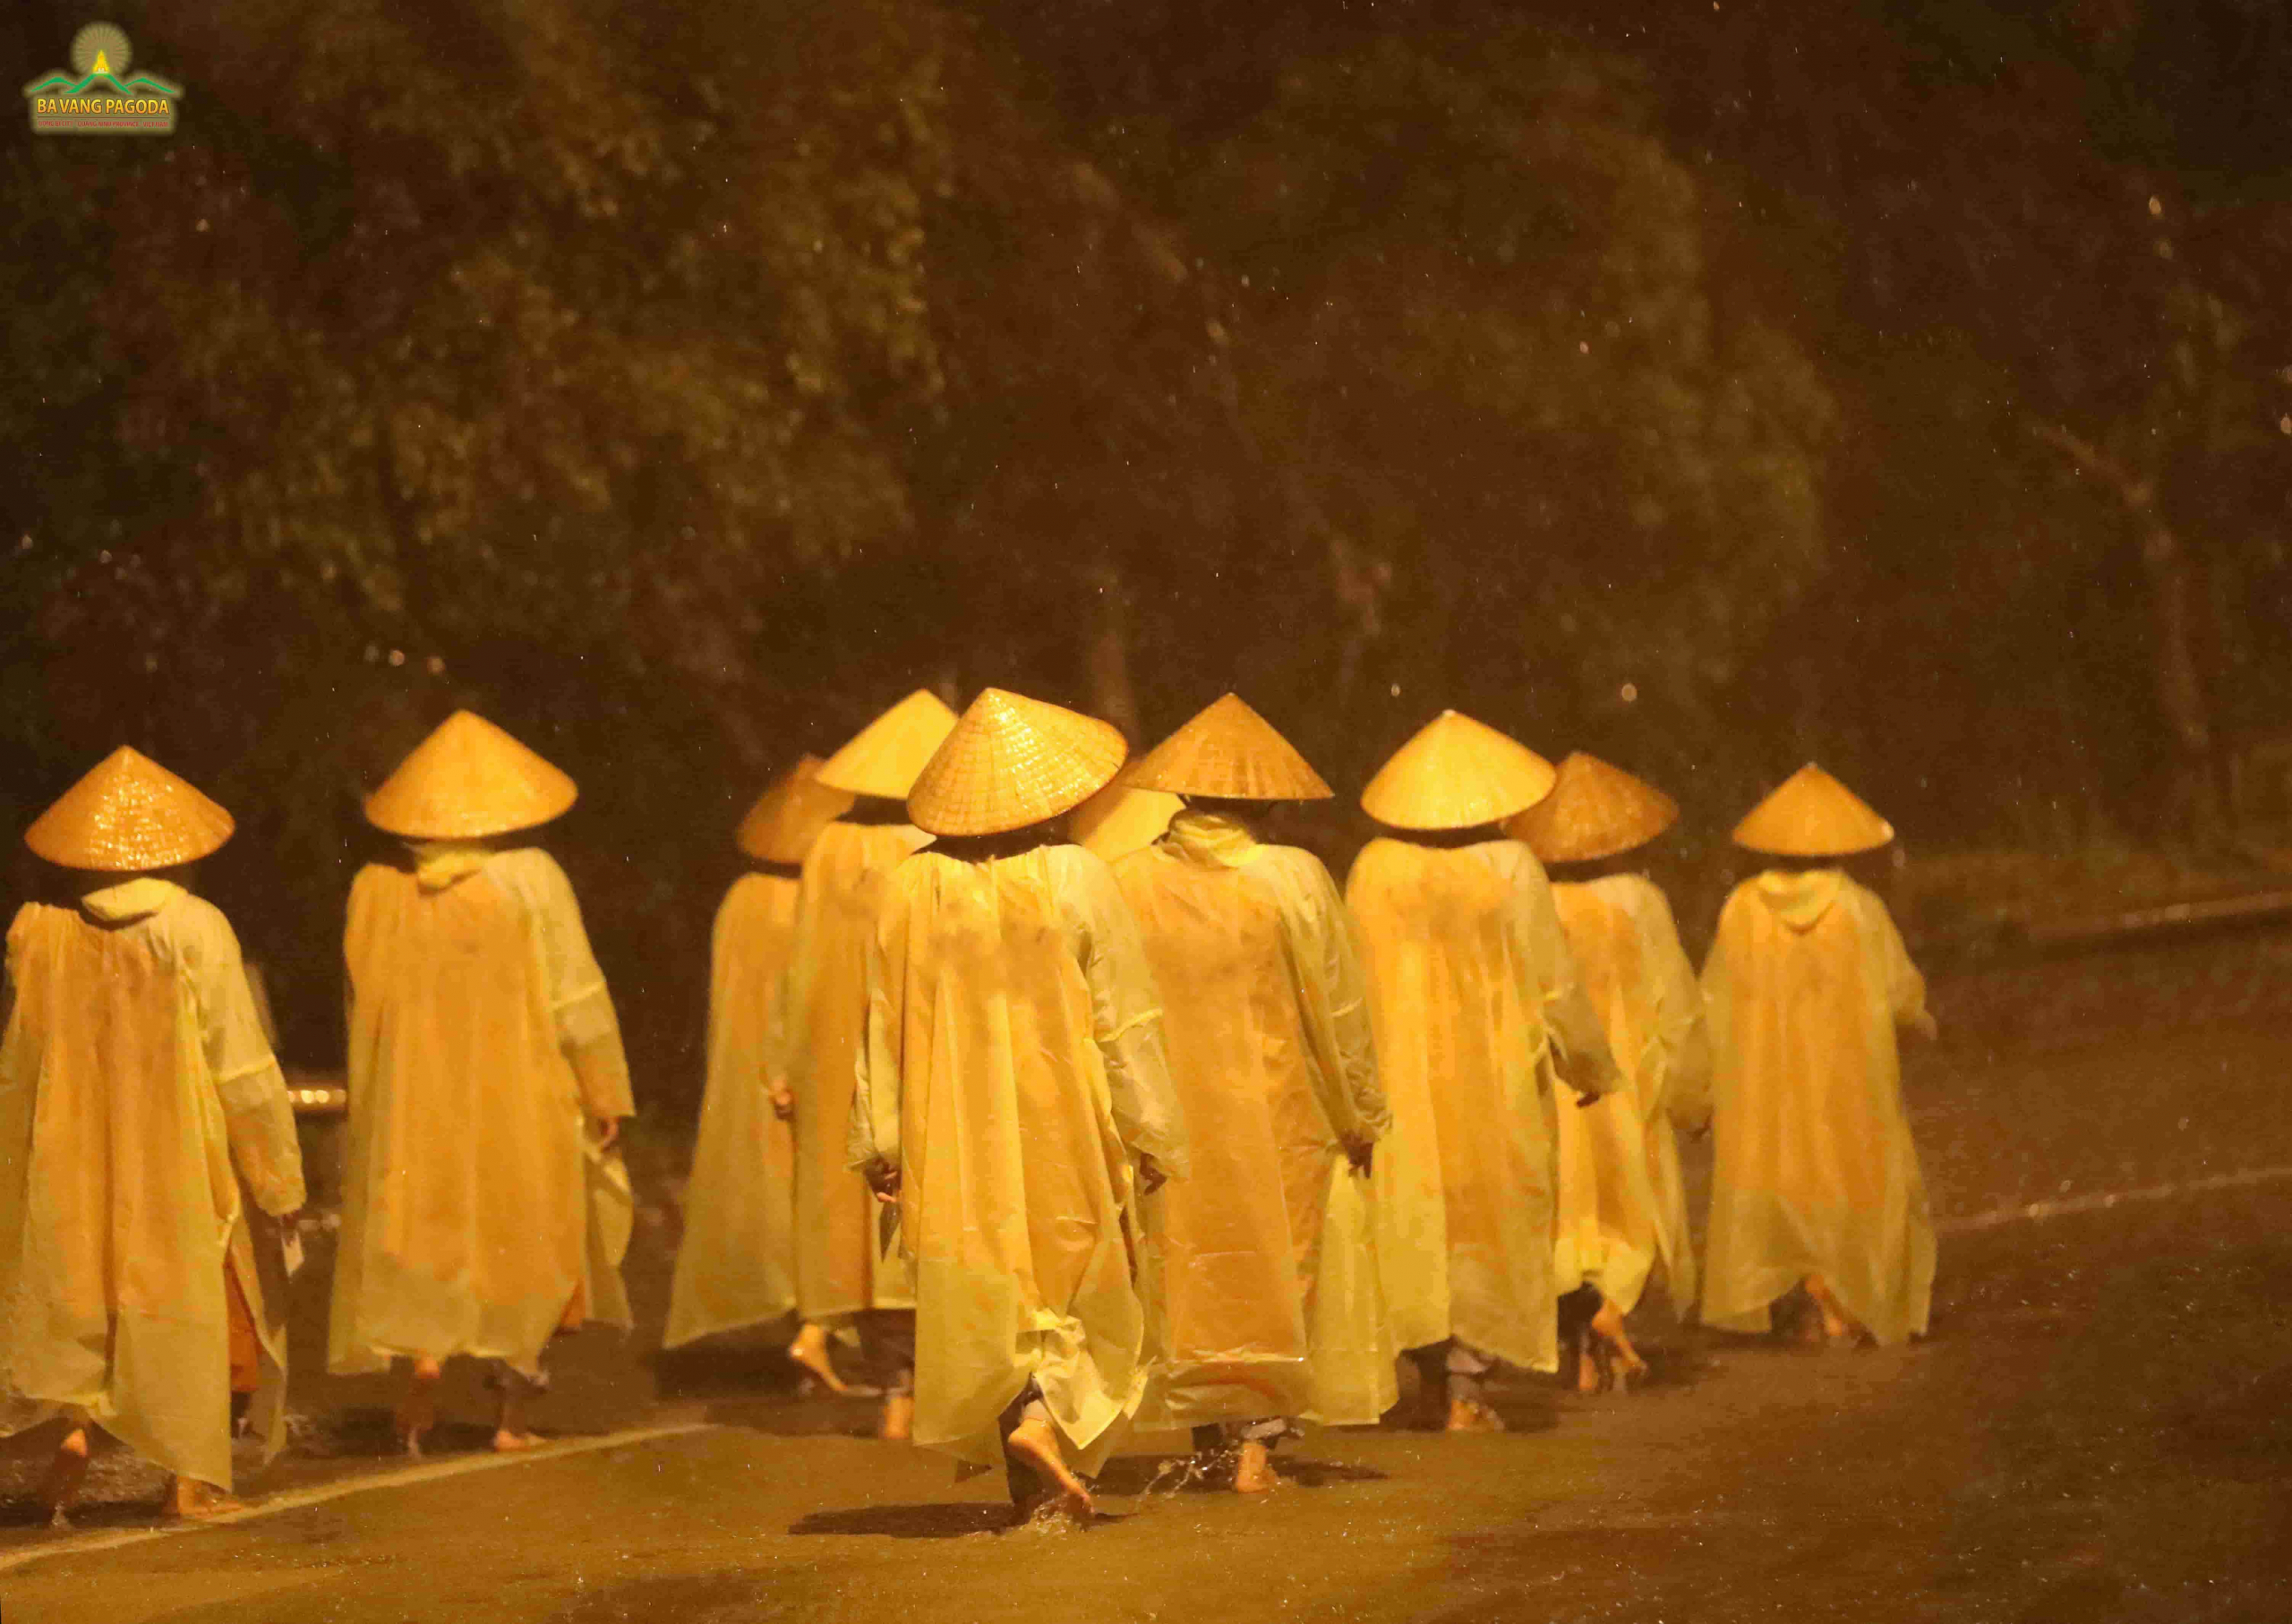 Nuns of Ba Vang Pagoda doing walking meditation in the pouring rain.